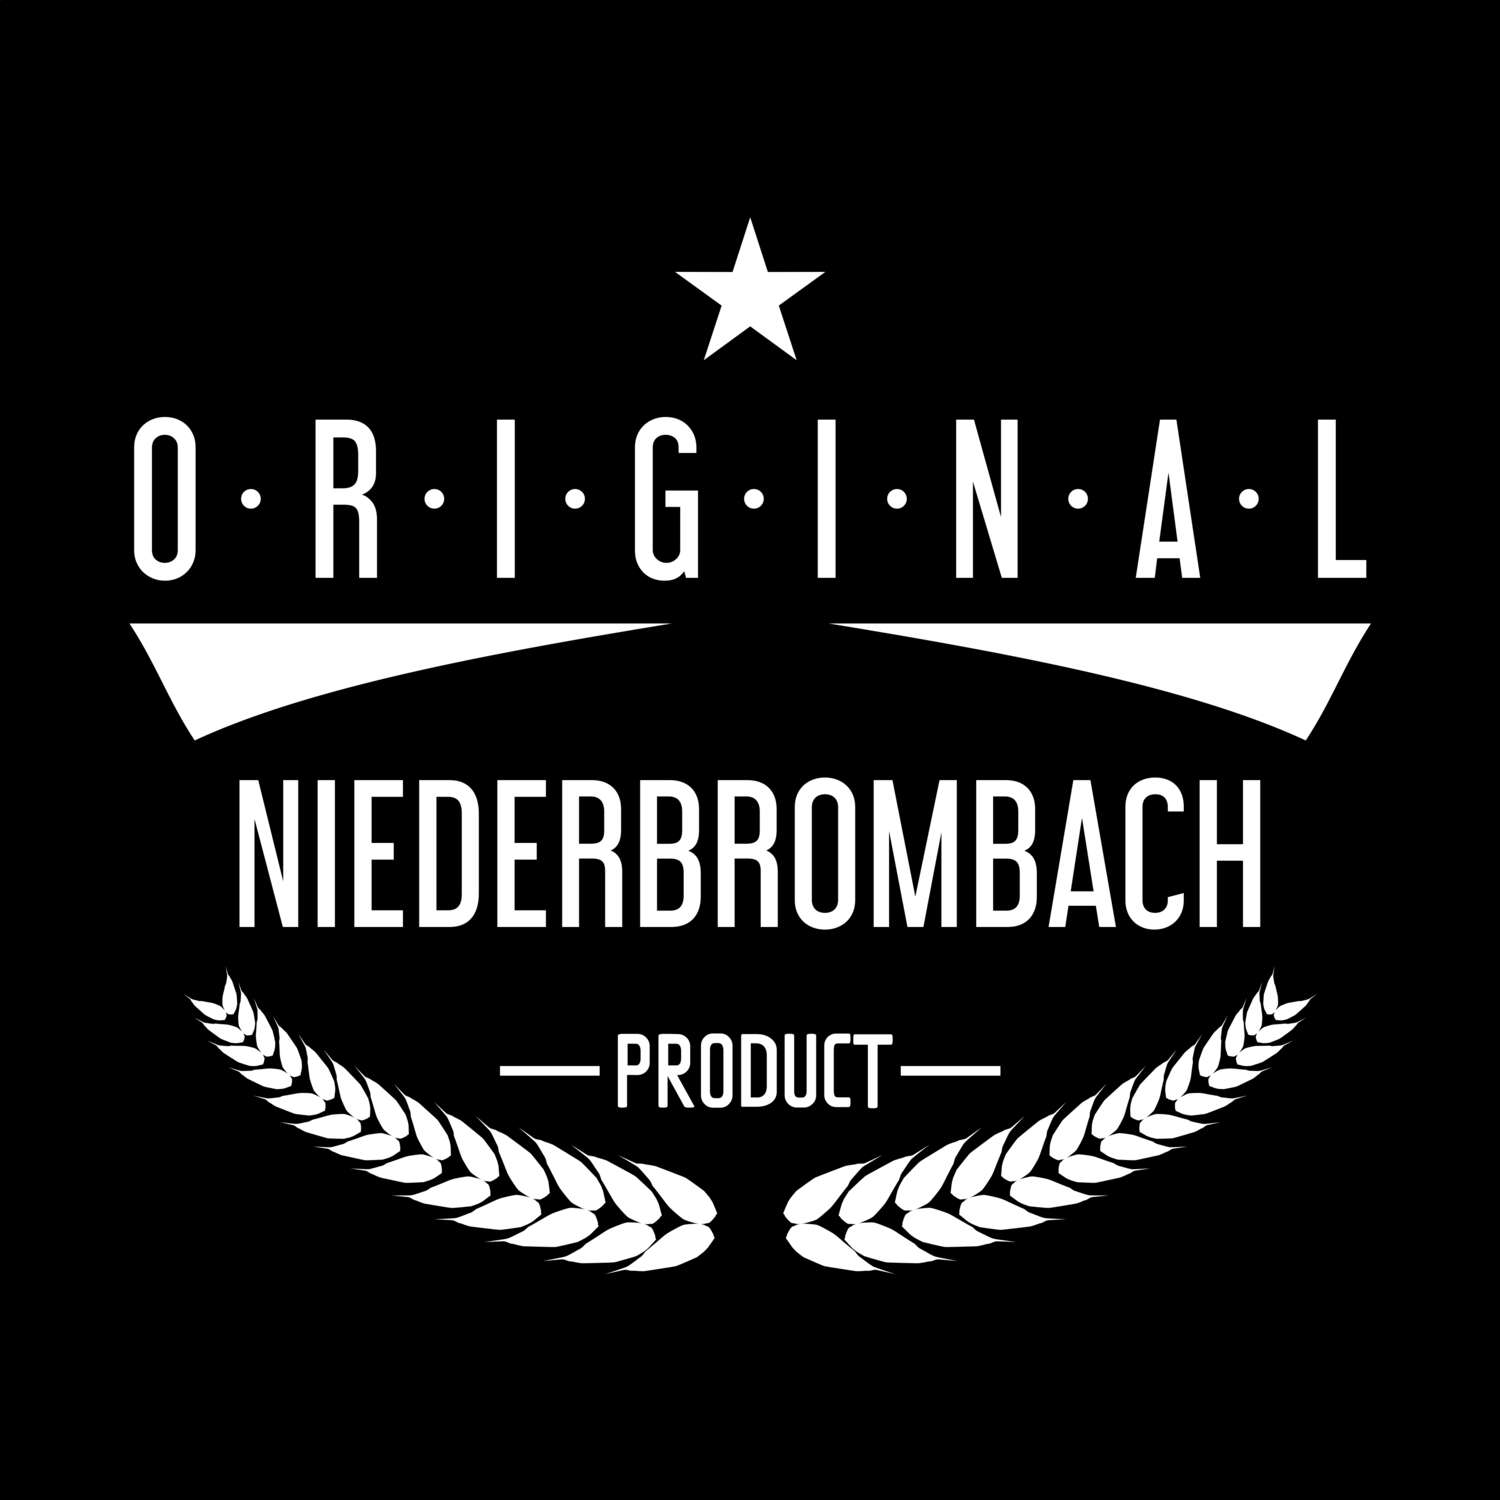 Niederbrombach T-Shirt »Original Product«